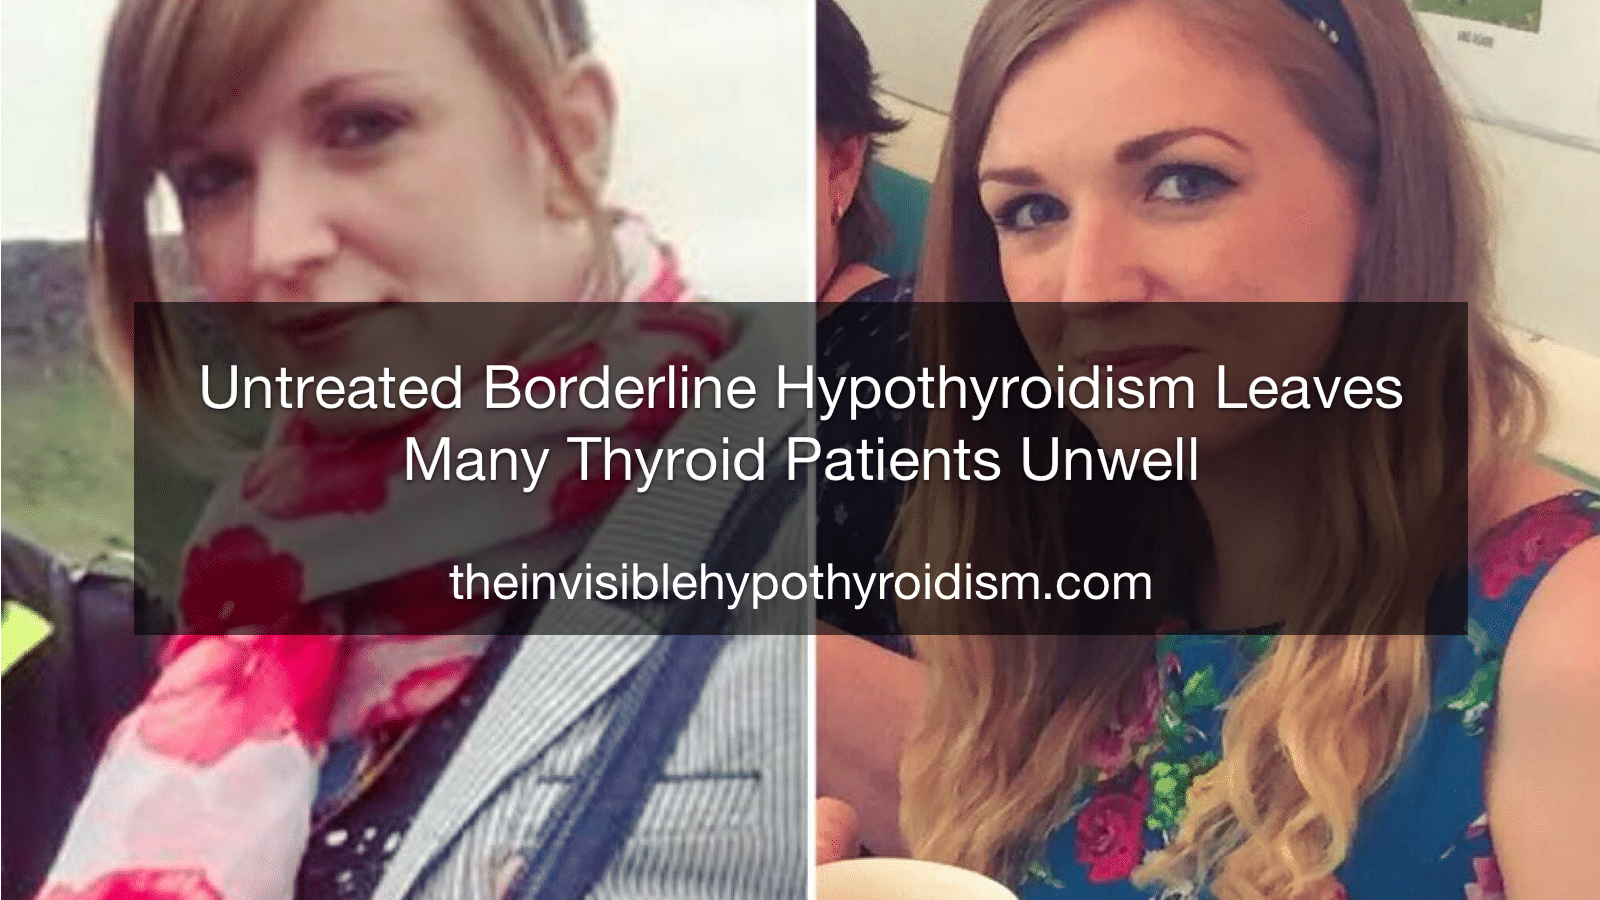 Untreated 'Borderline Hypothyroidism' Leaves Many Thyroid Patients Unwell